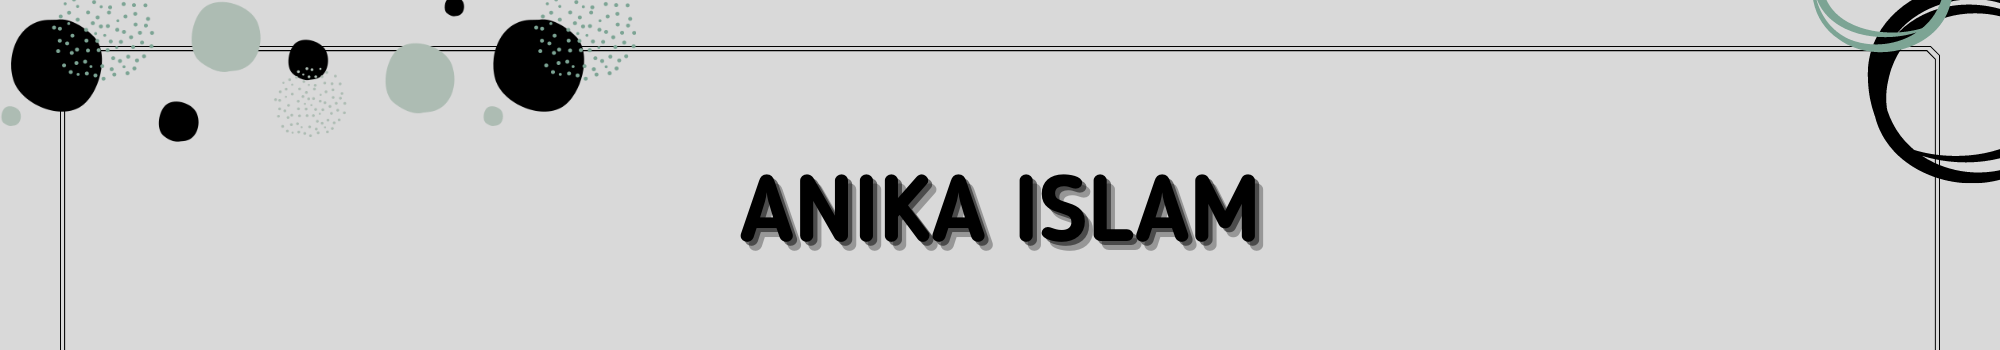 Anika Islam's profile banner